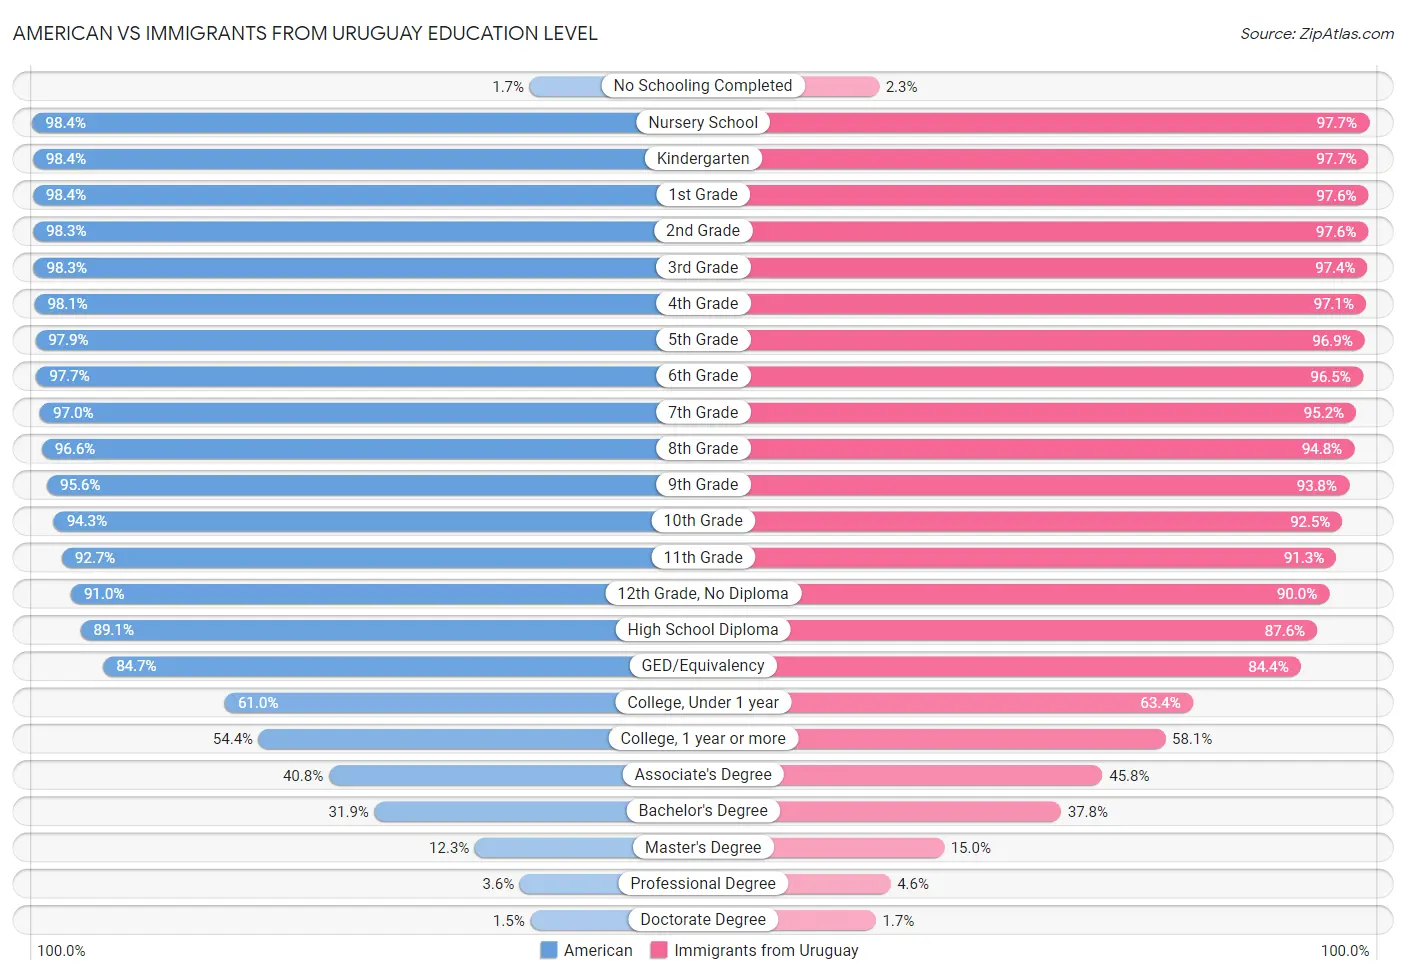 American vs Immigrants from Uruguay Education Level